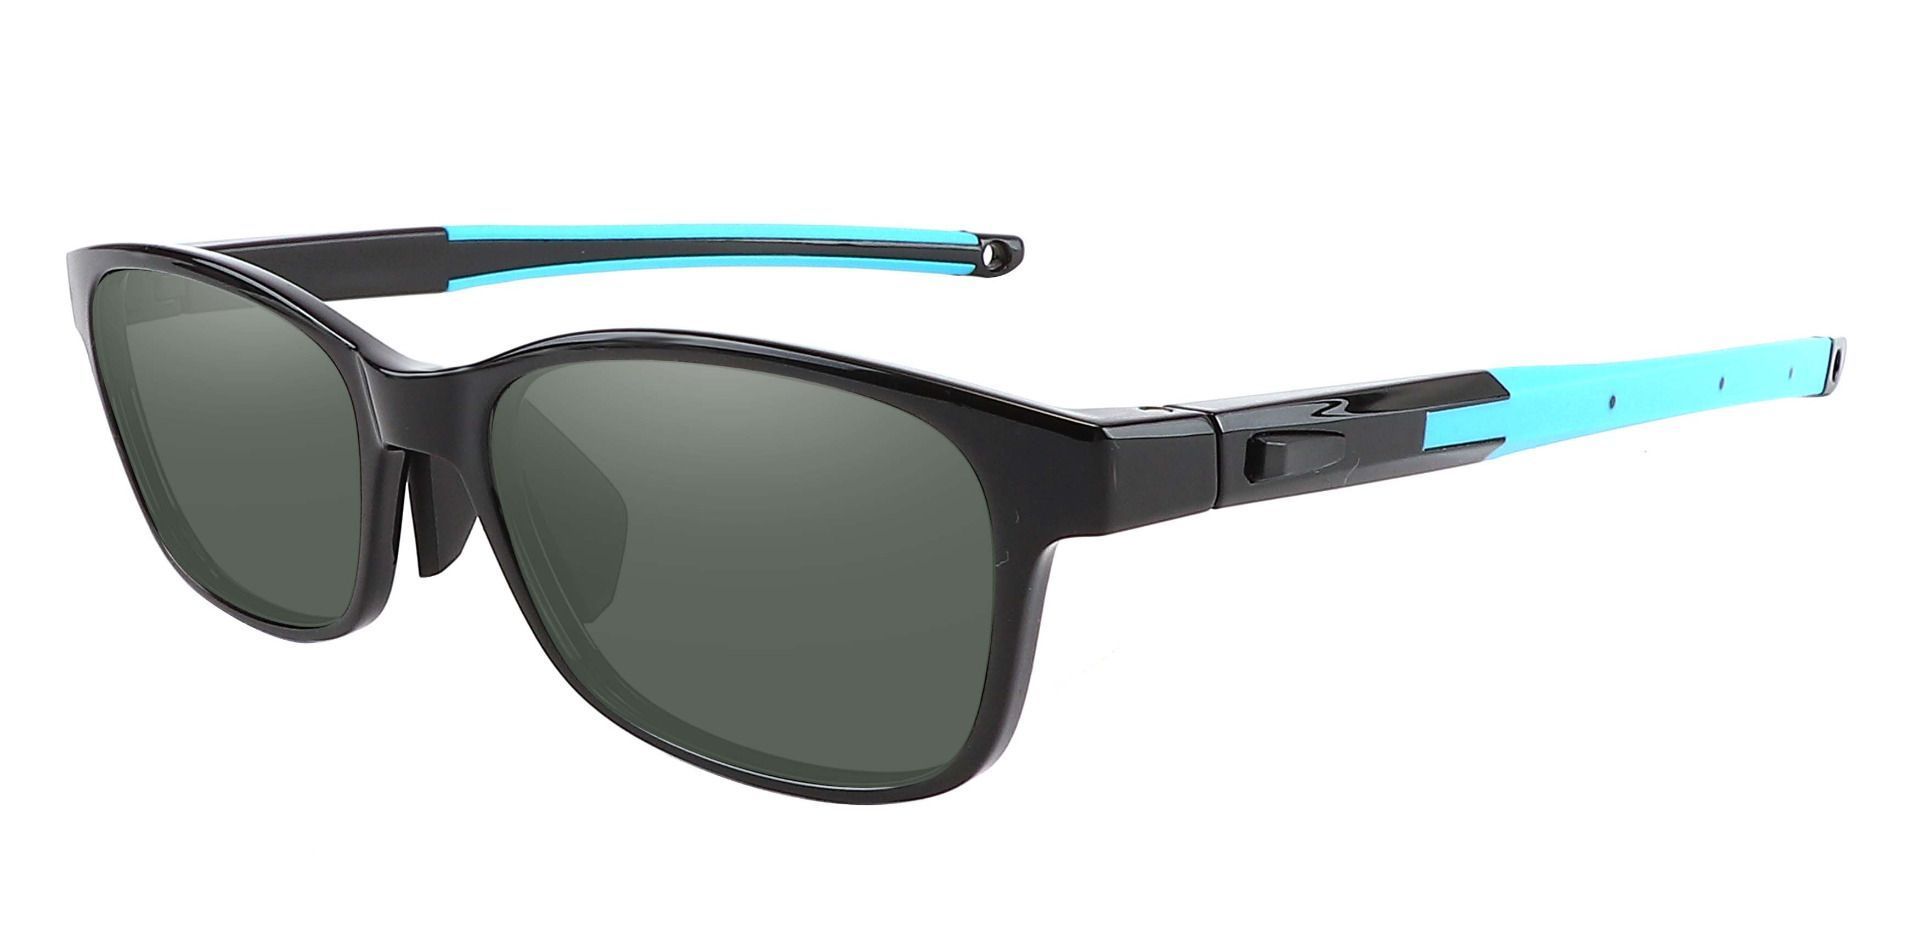 Higgins Rectangle Lined Bifocal Sunglasses - Black Frame With Green Lenses